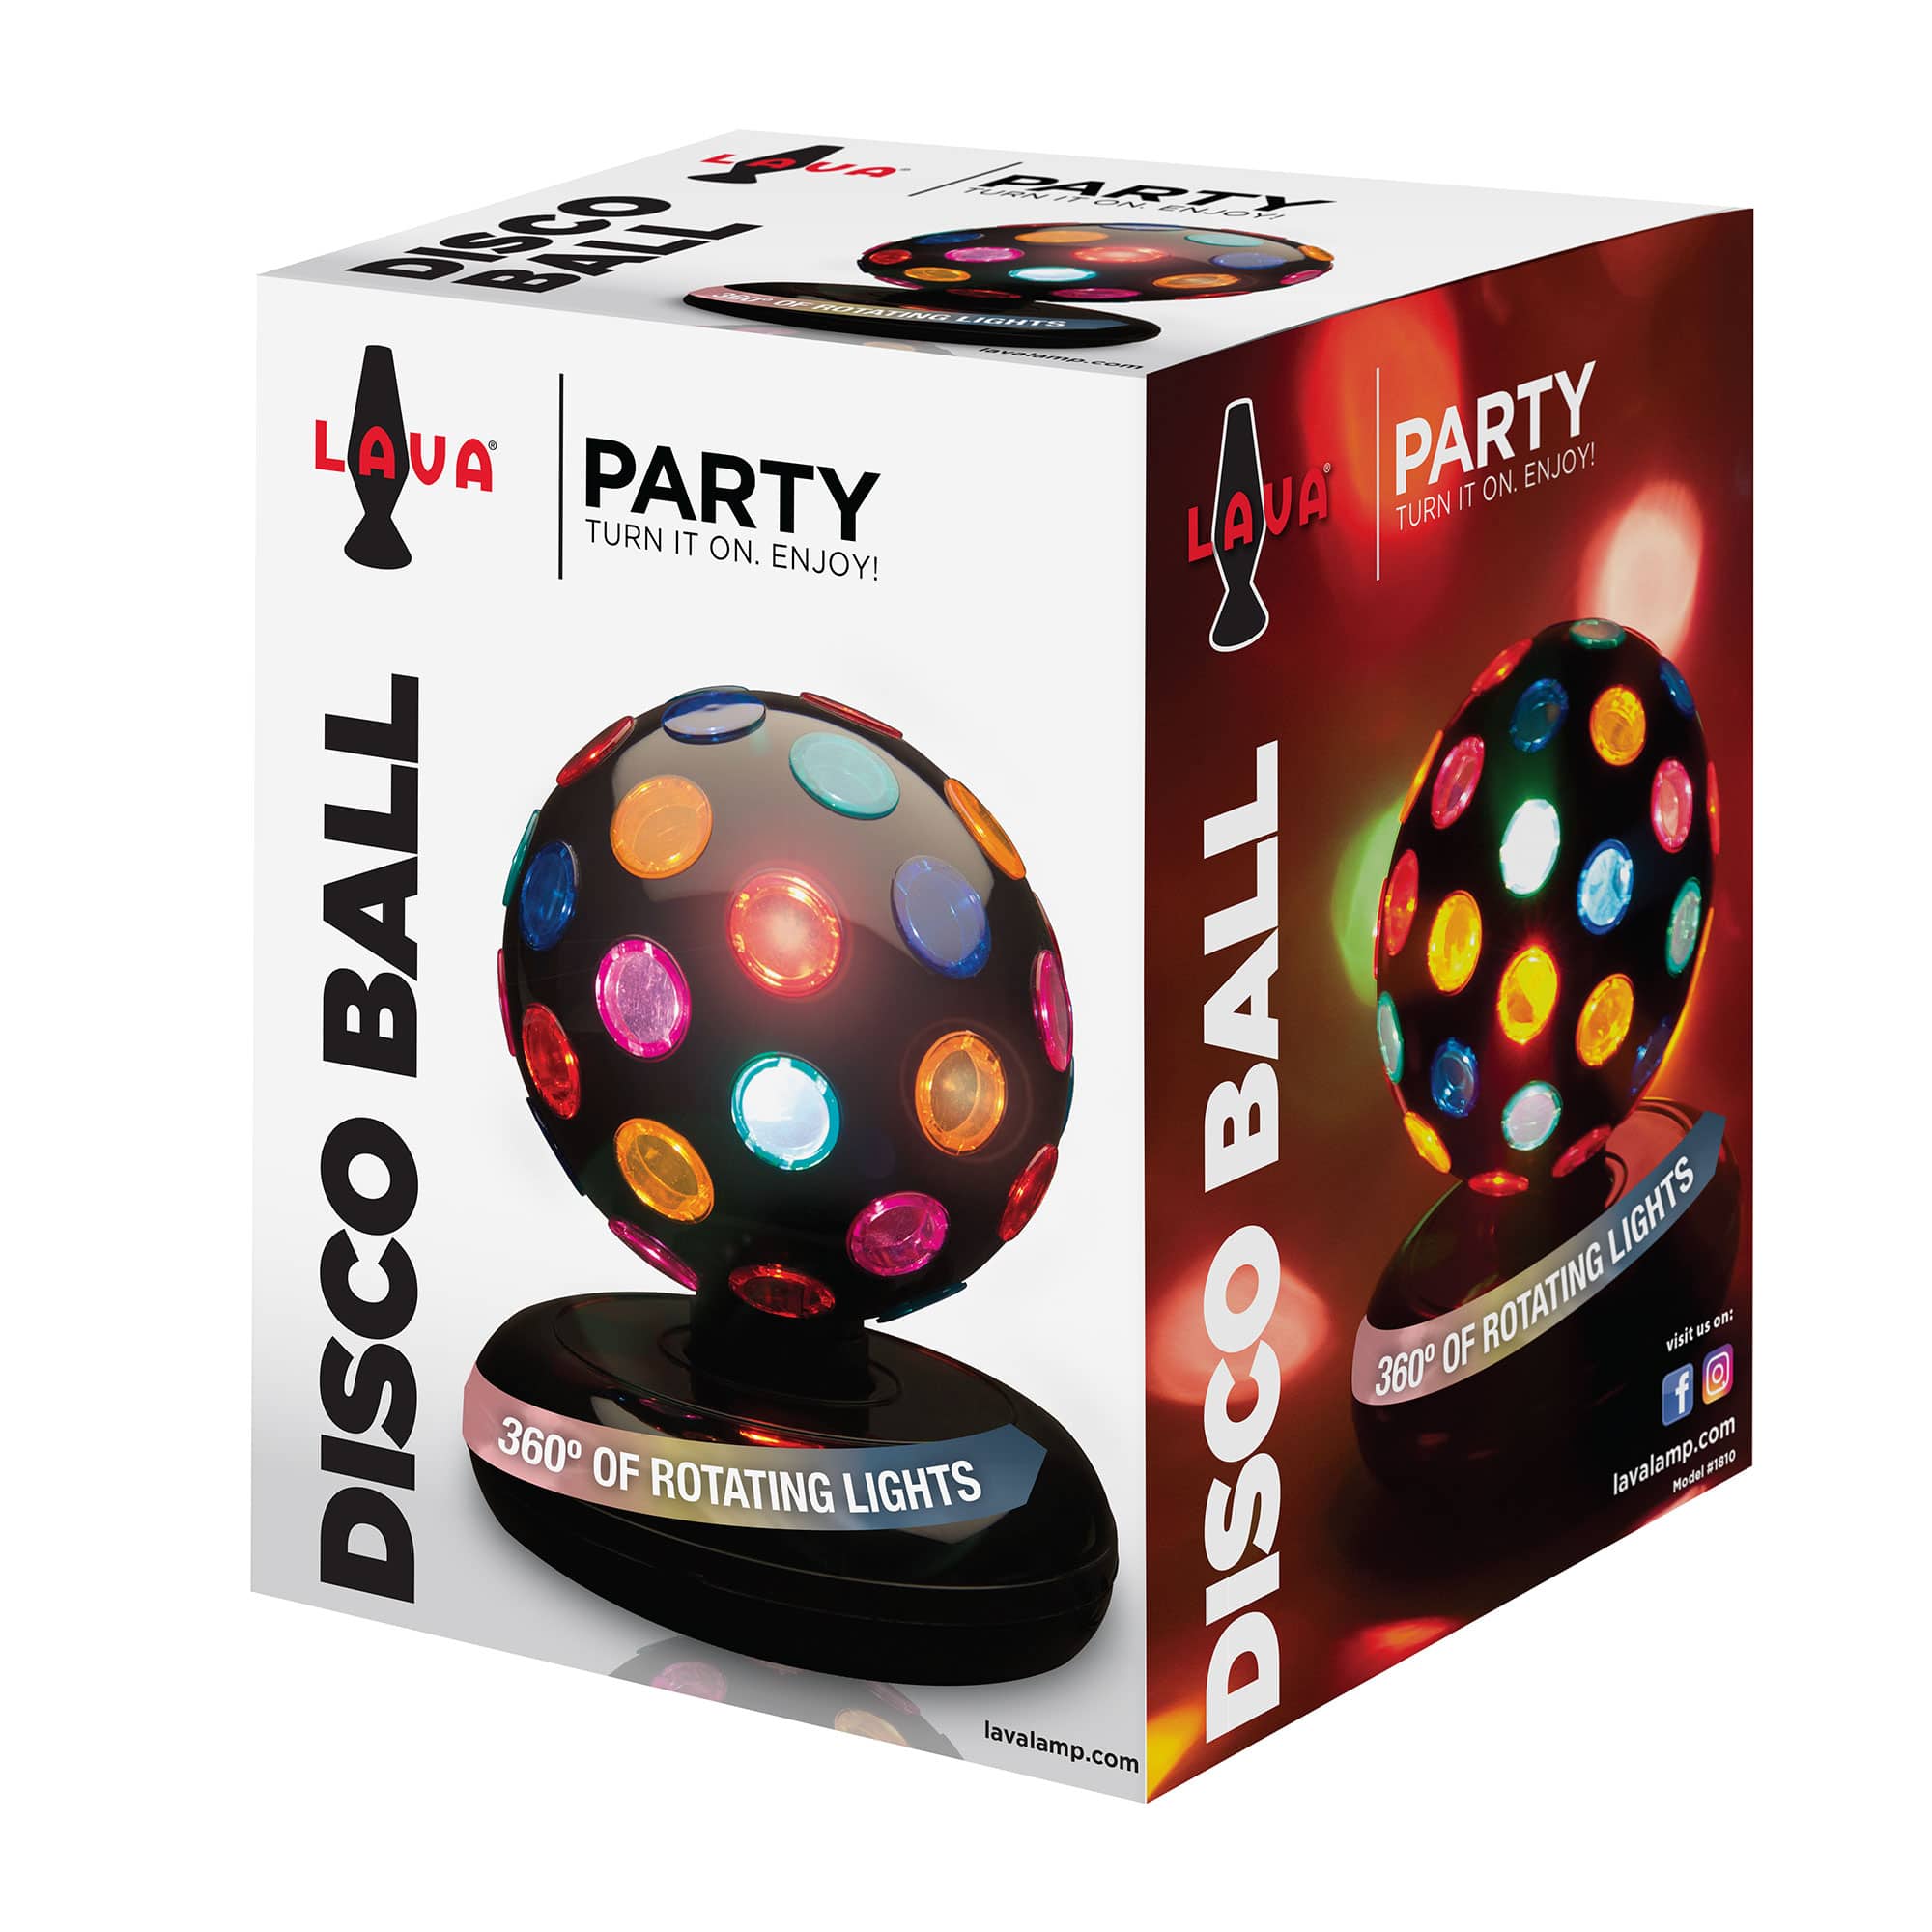 Disco Ball – Sensory Tool House, LLC